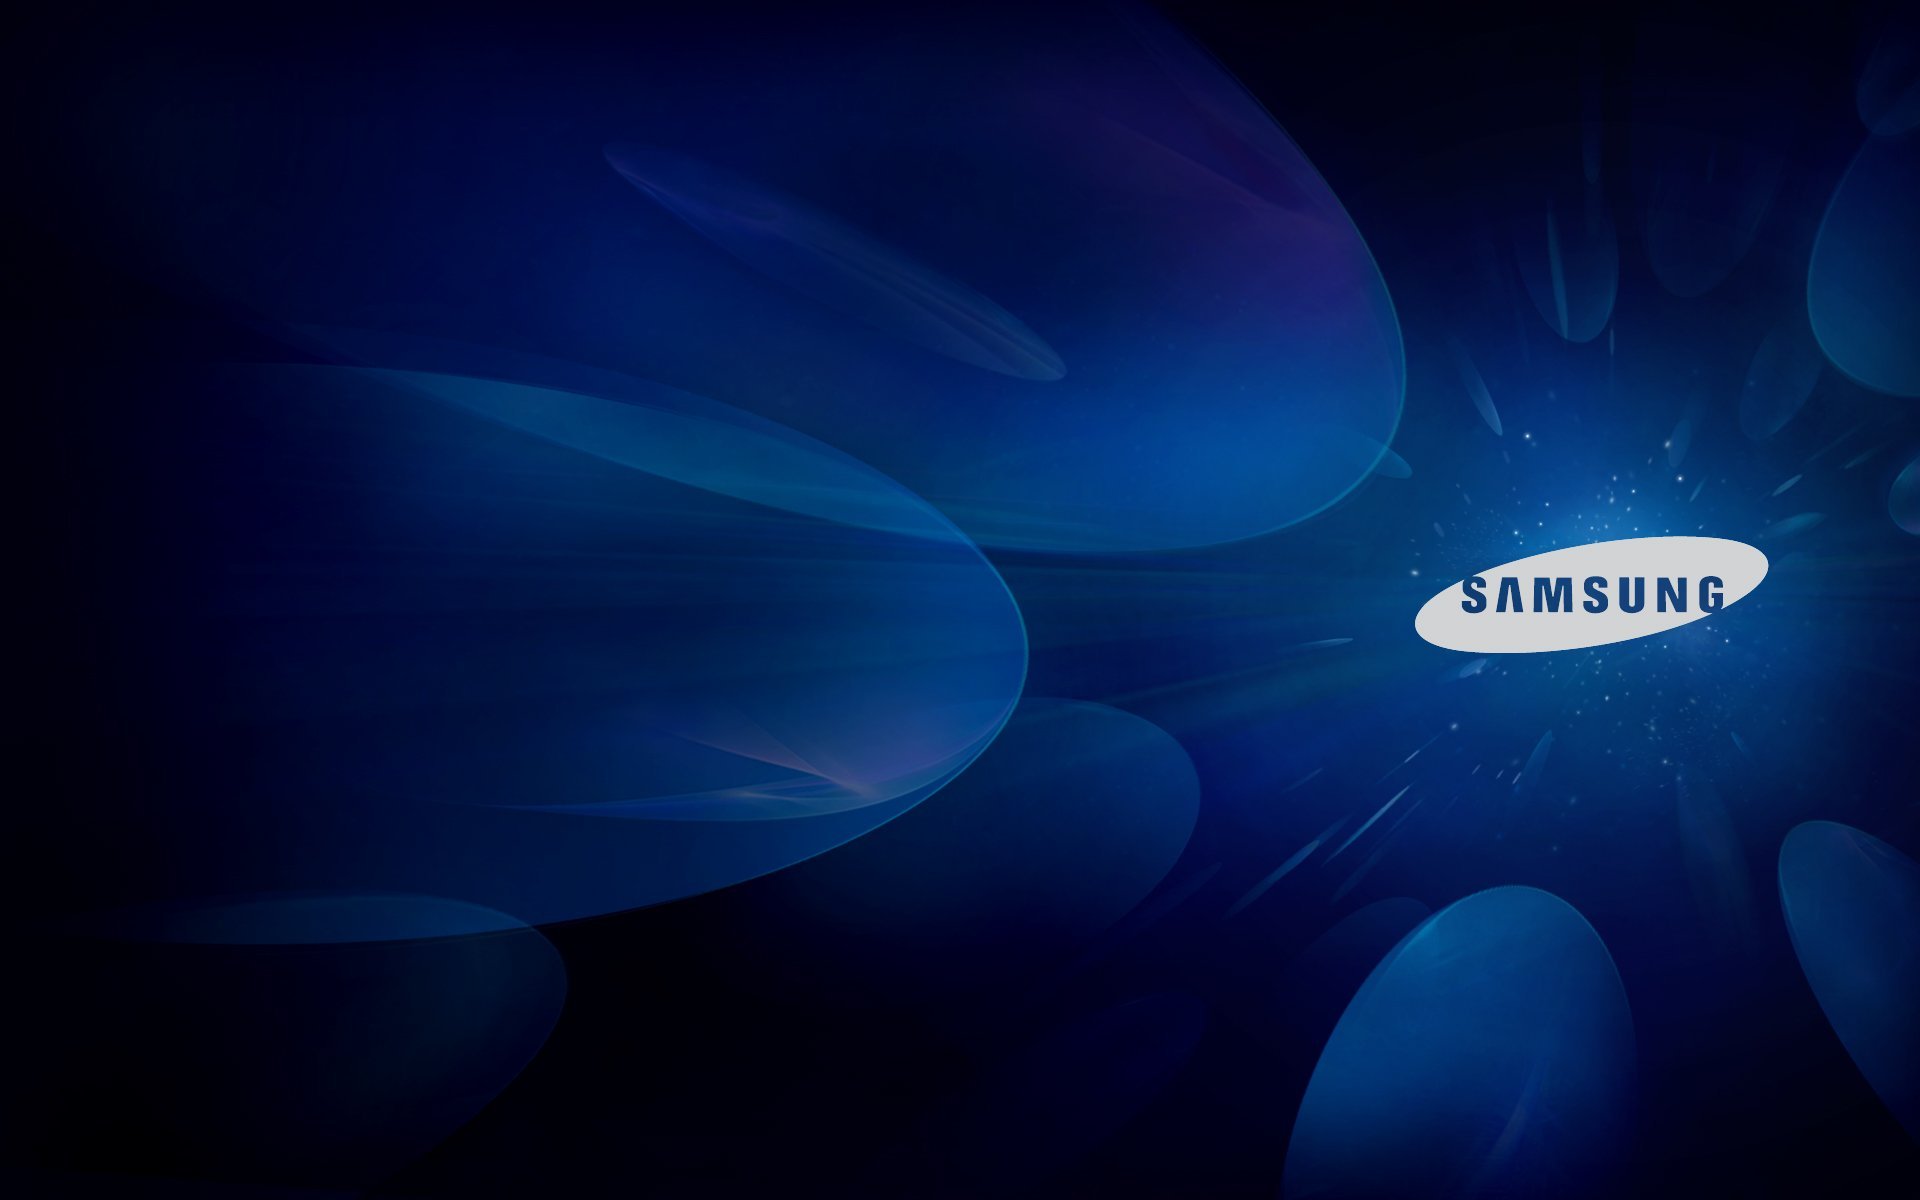 Samsung logo 2021